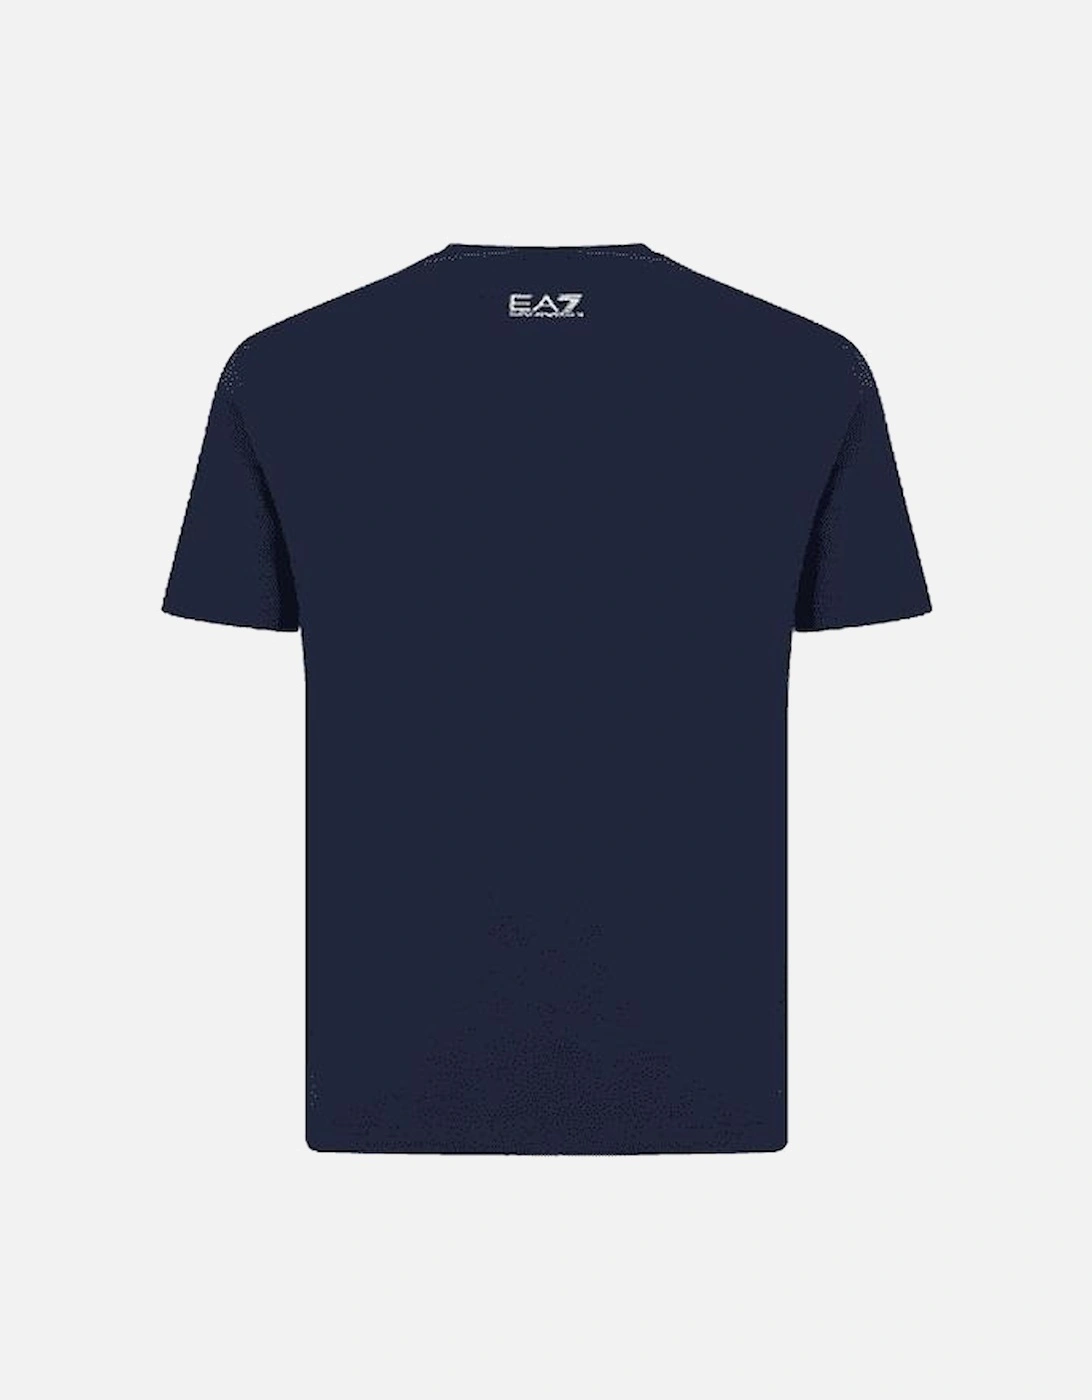 Cotton Printed Logo Navy Blue T-Shirt